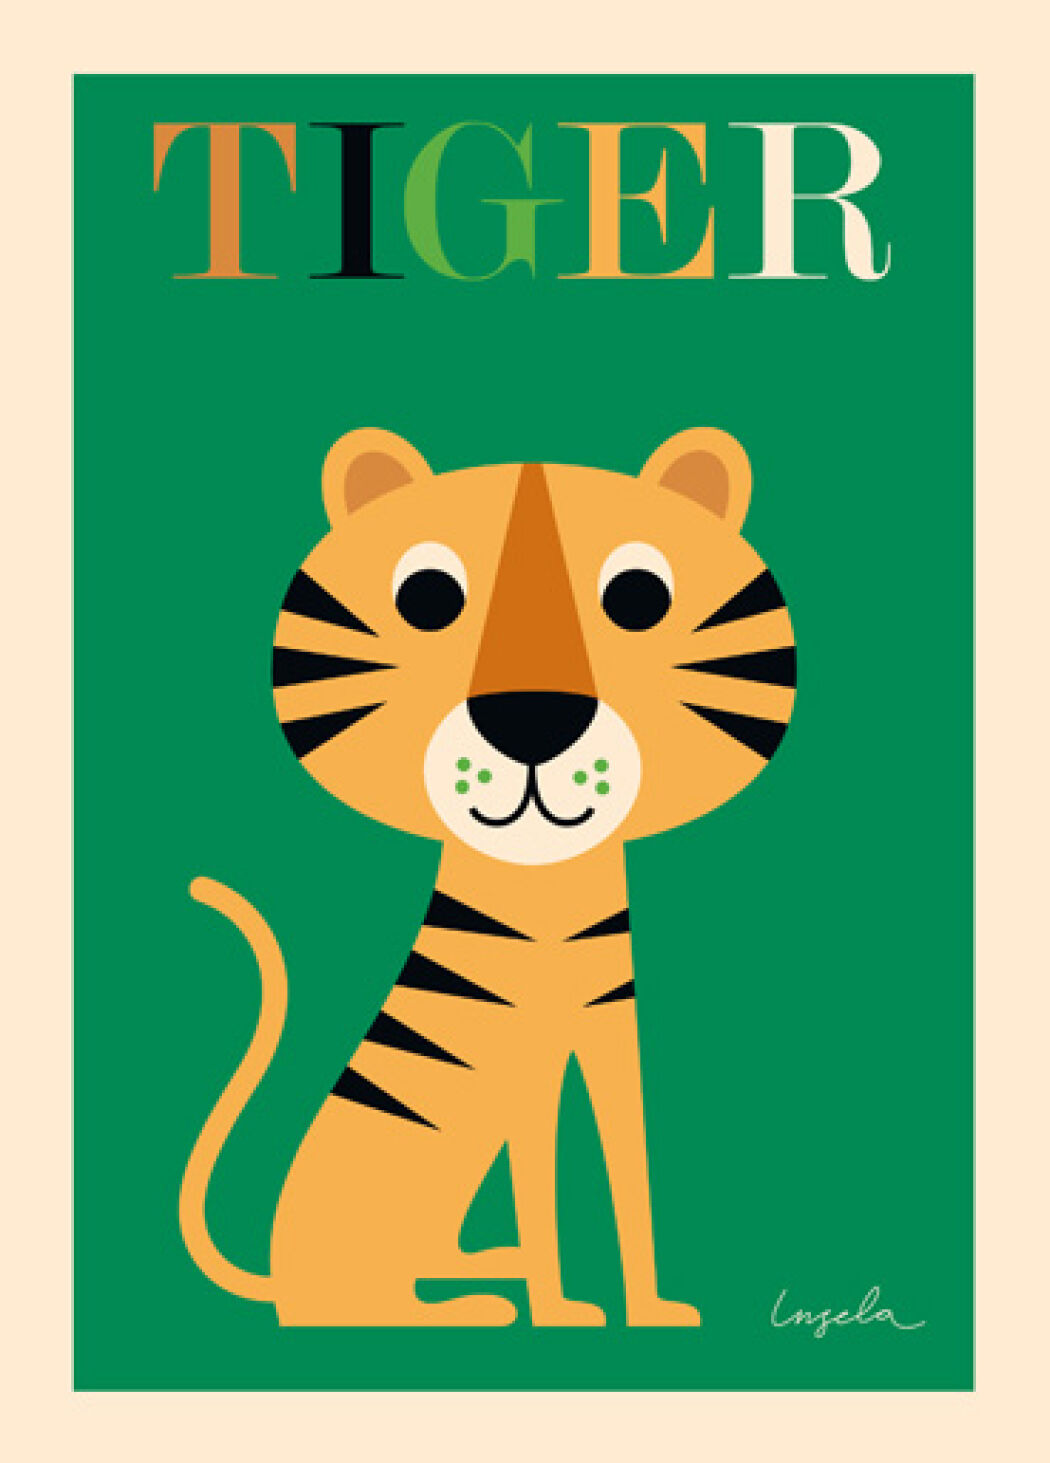 Nostalgic Tiger poster, Illustration and graphic design by Ingela P Arrhenius